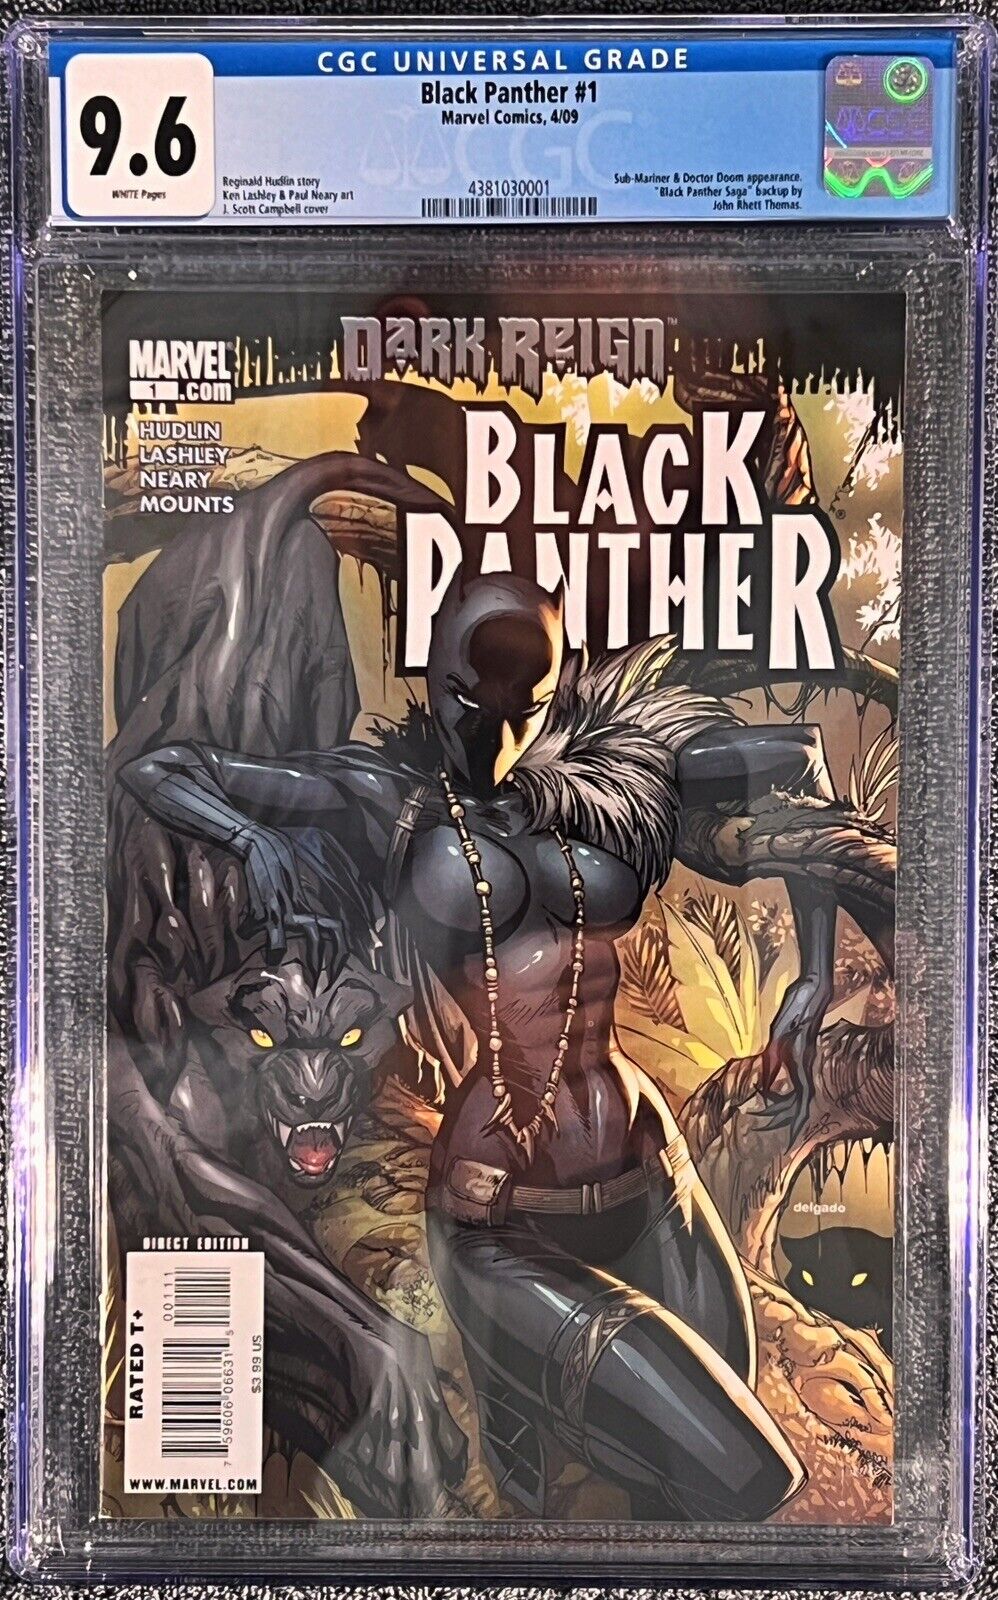 Black Panther #1 Vol 5 CGC 9.6, First Shuri Cover As Black Panther